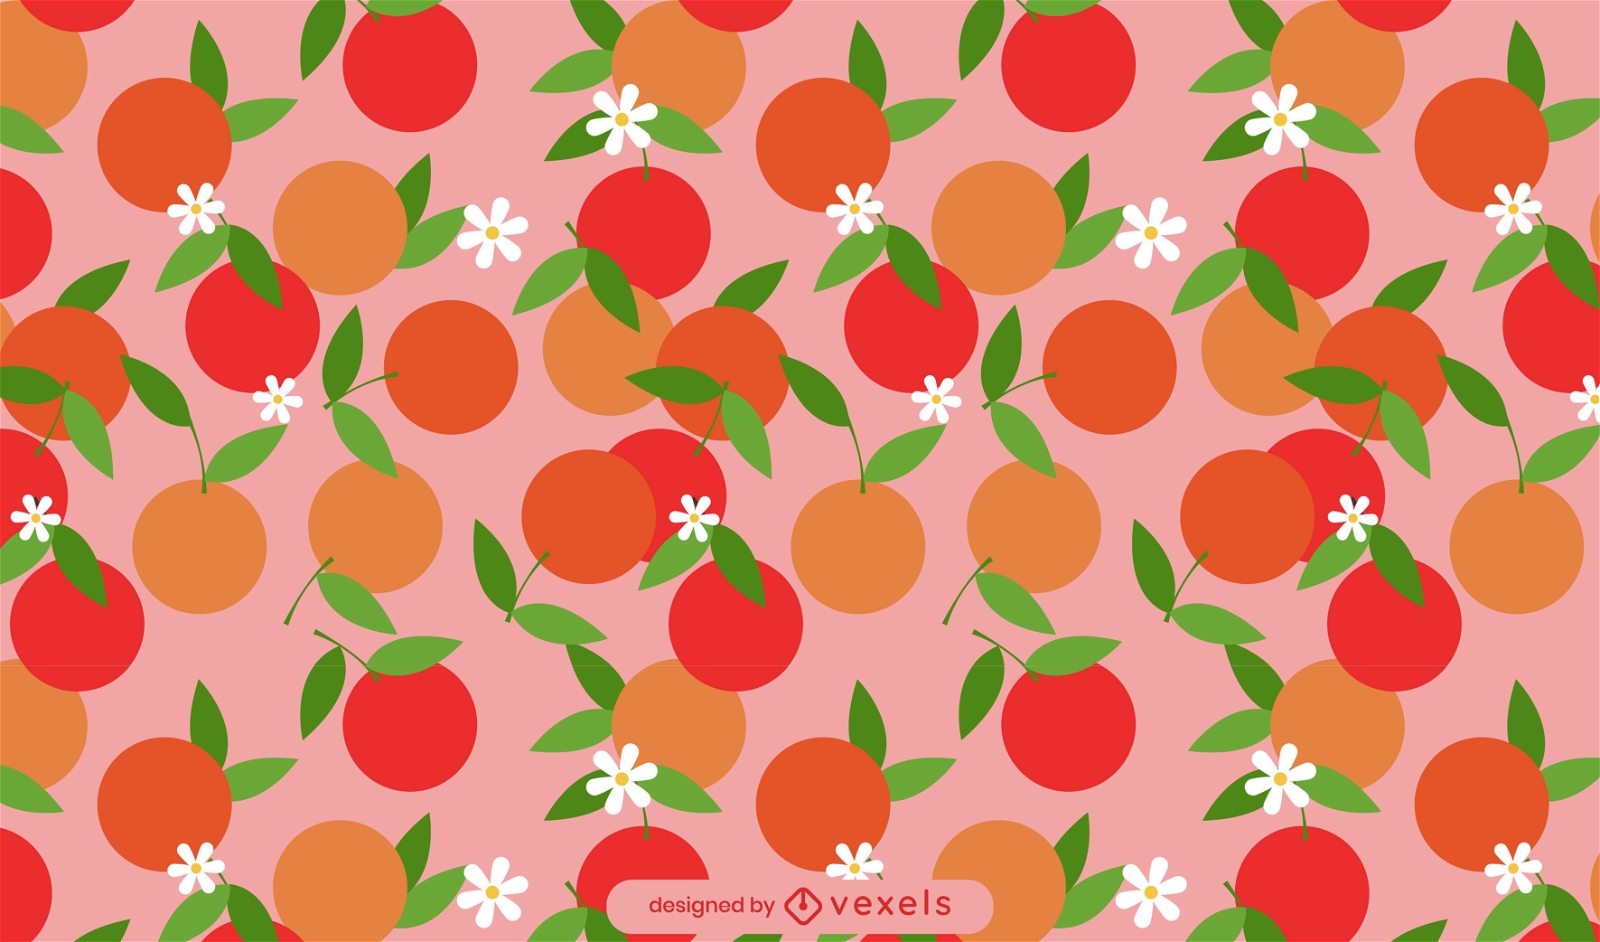 Oranges and apples fruits pattern design